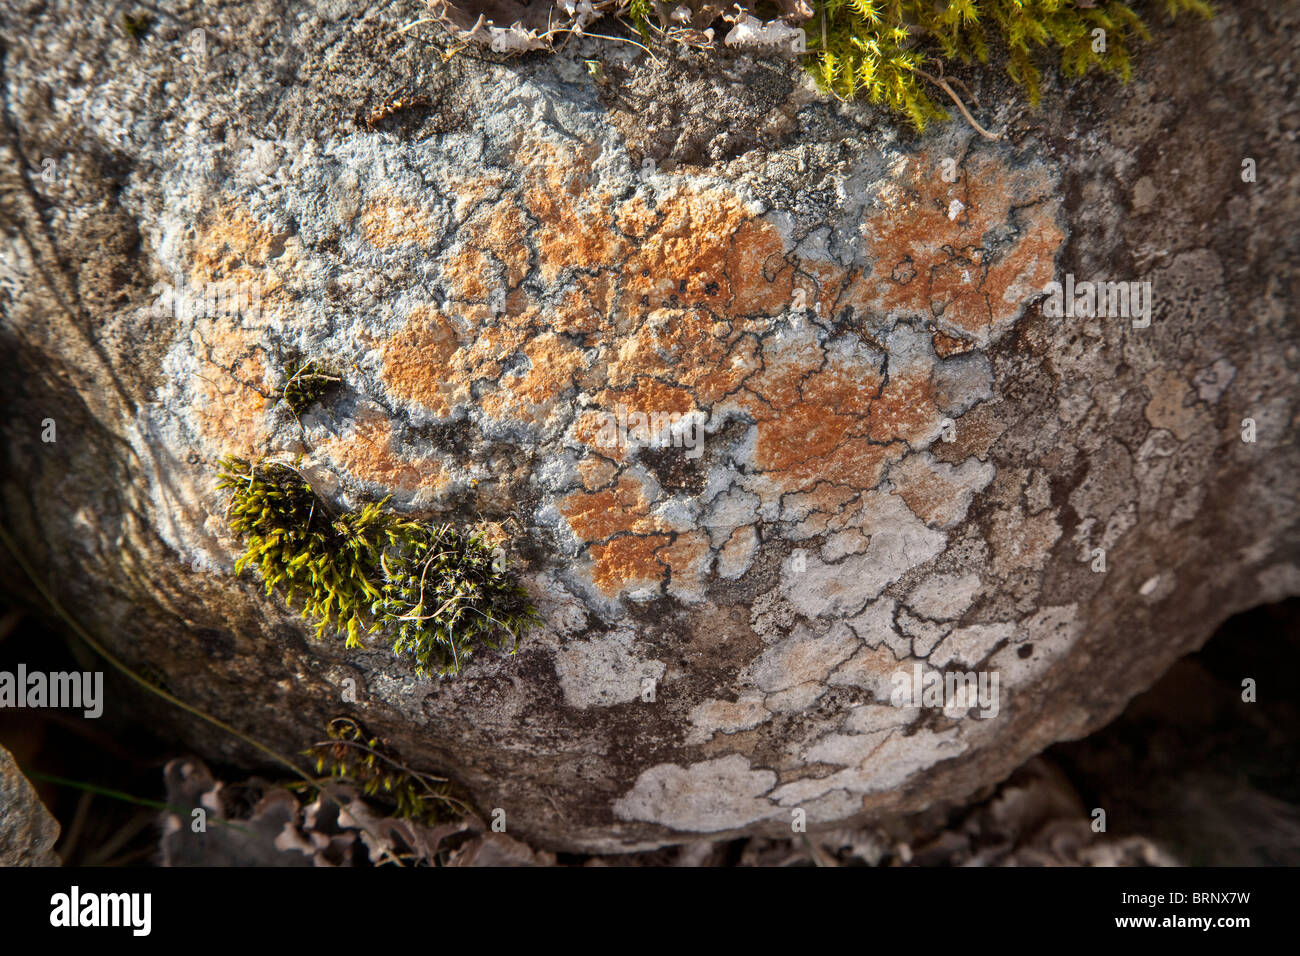 Rich lichen diversity growing on granite rock, Norway Stock Photo